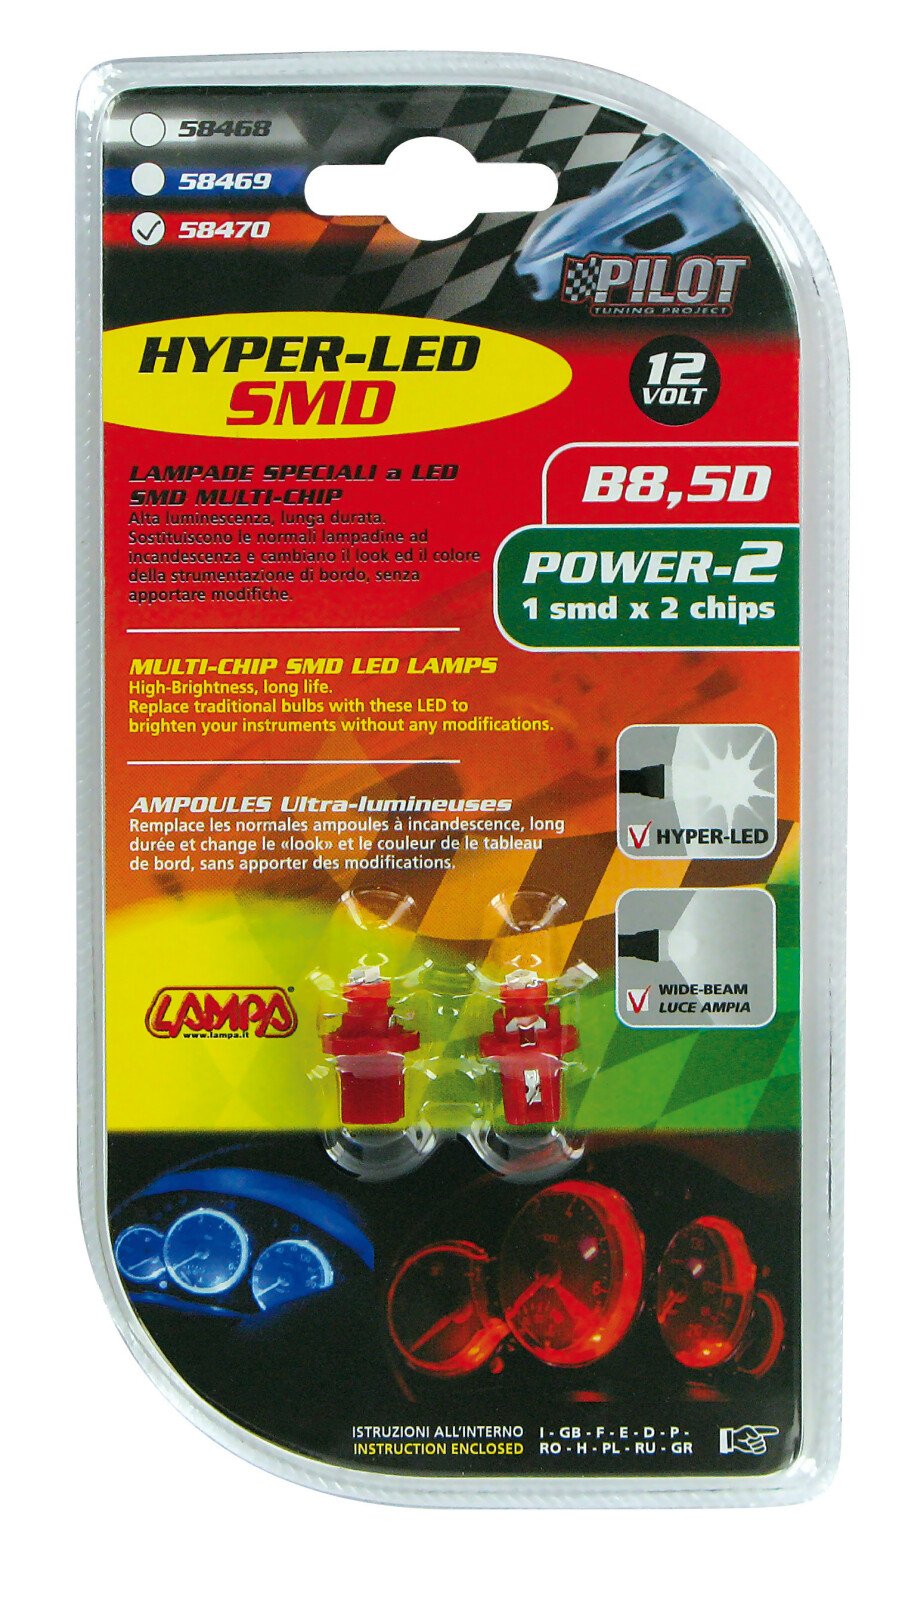 12V Hyper-Led 2 - 1 SMD x 2 chips - B8,5d - 2 pcs - Red thumb